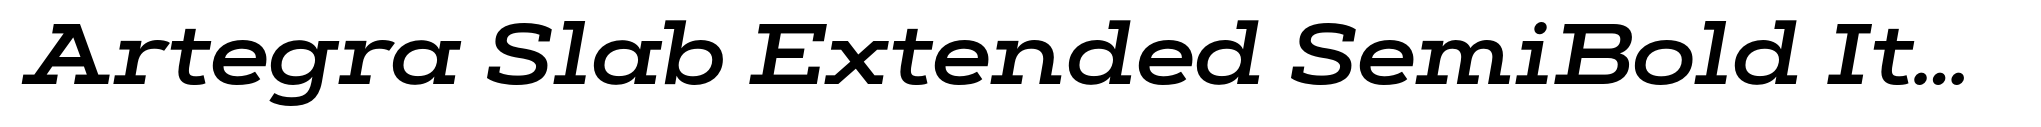 Artegra Slab Extended SemiBold Italic image